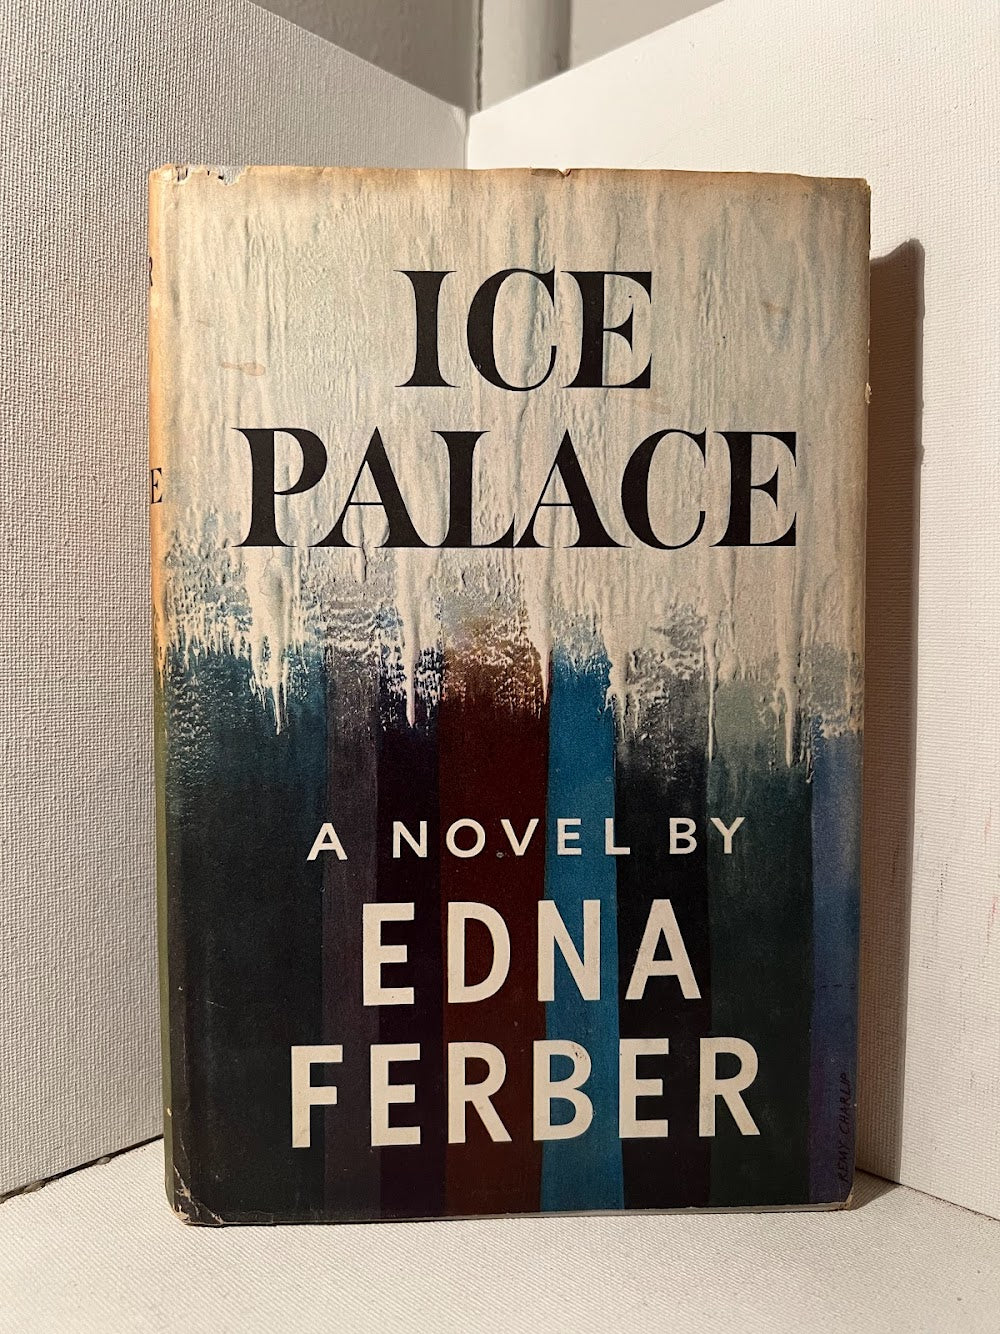 Ice Palace by Edna Ferber